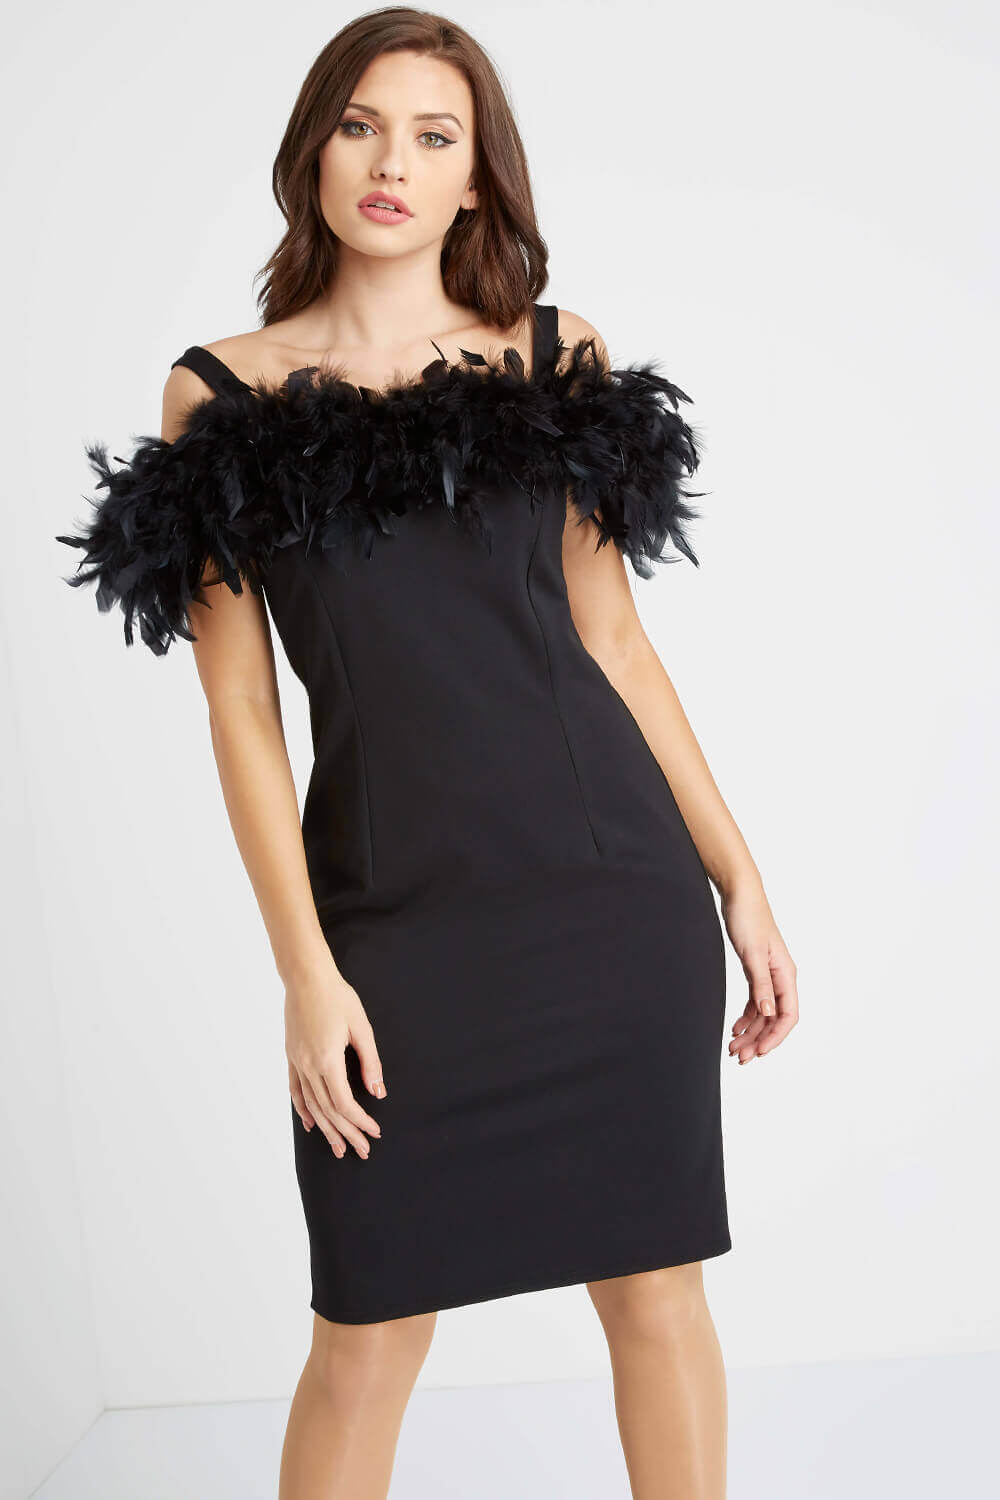 black feather dress uk